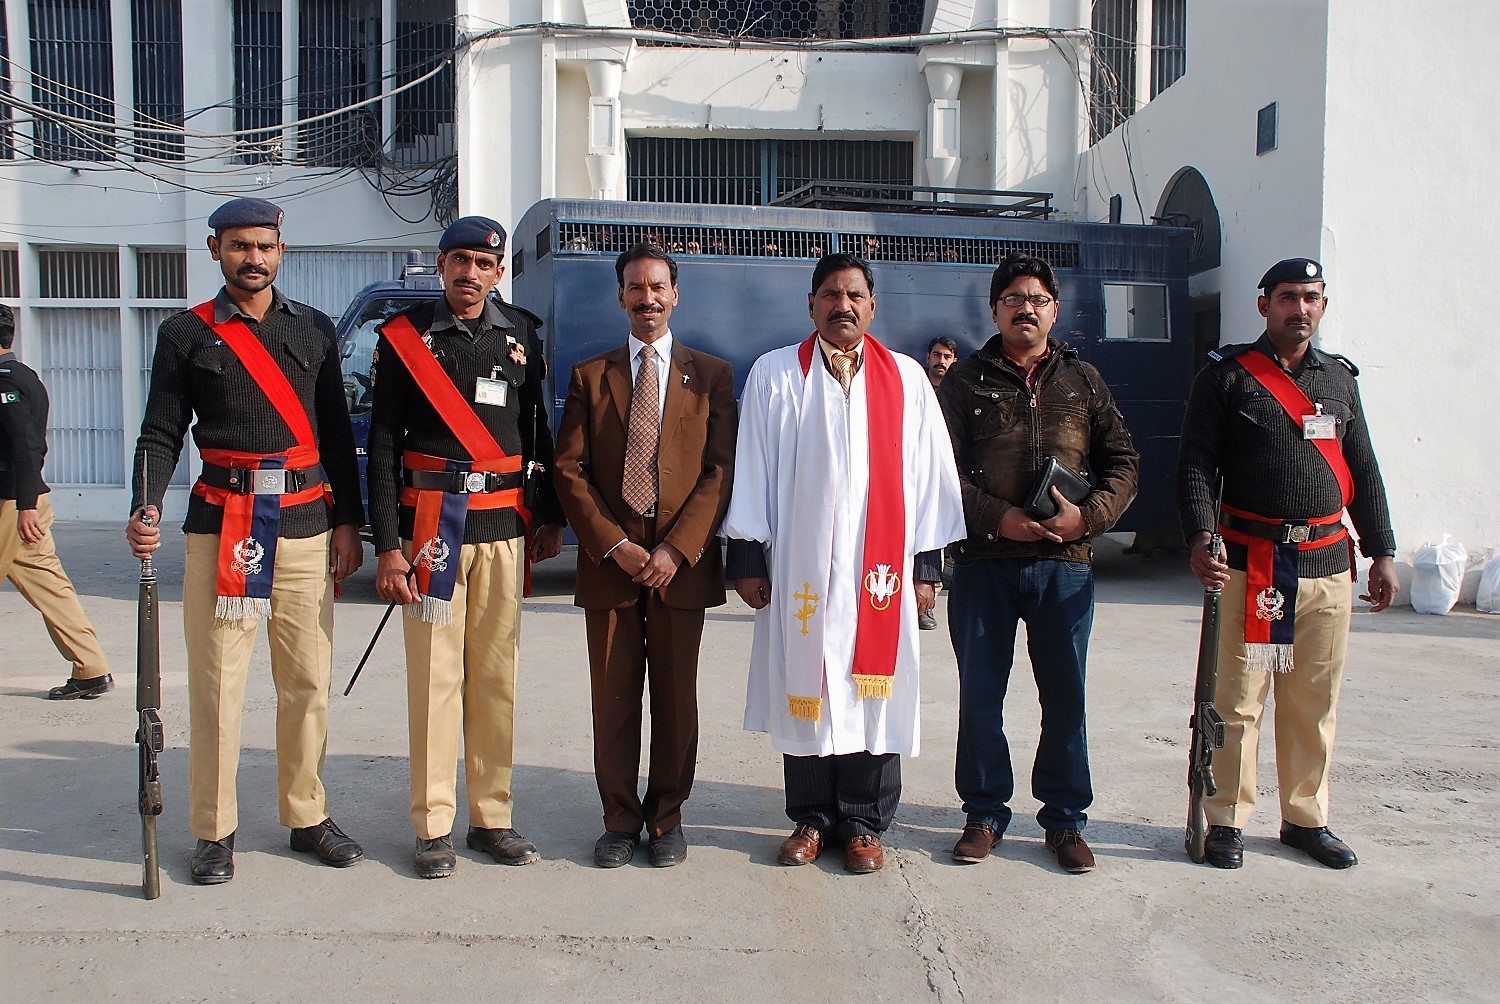 Christmas and New Year at Central jail, Gujranwala, Pakistan